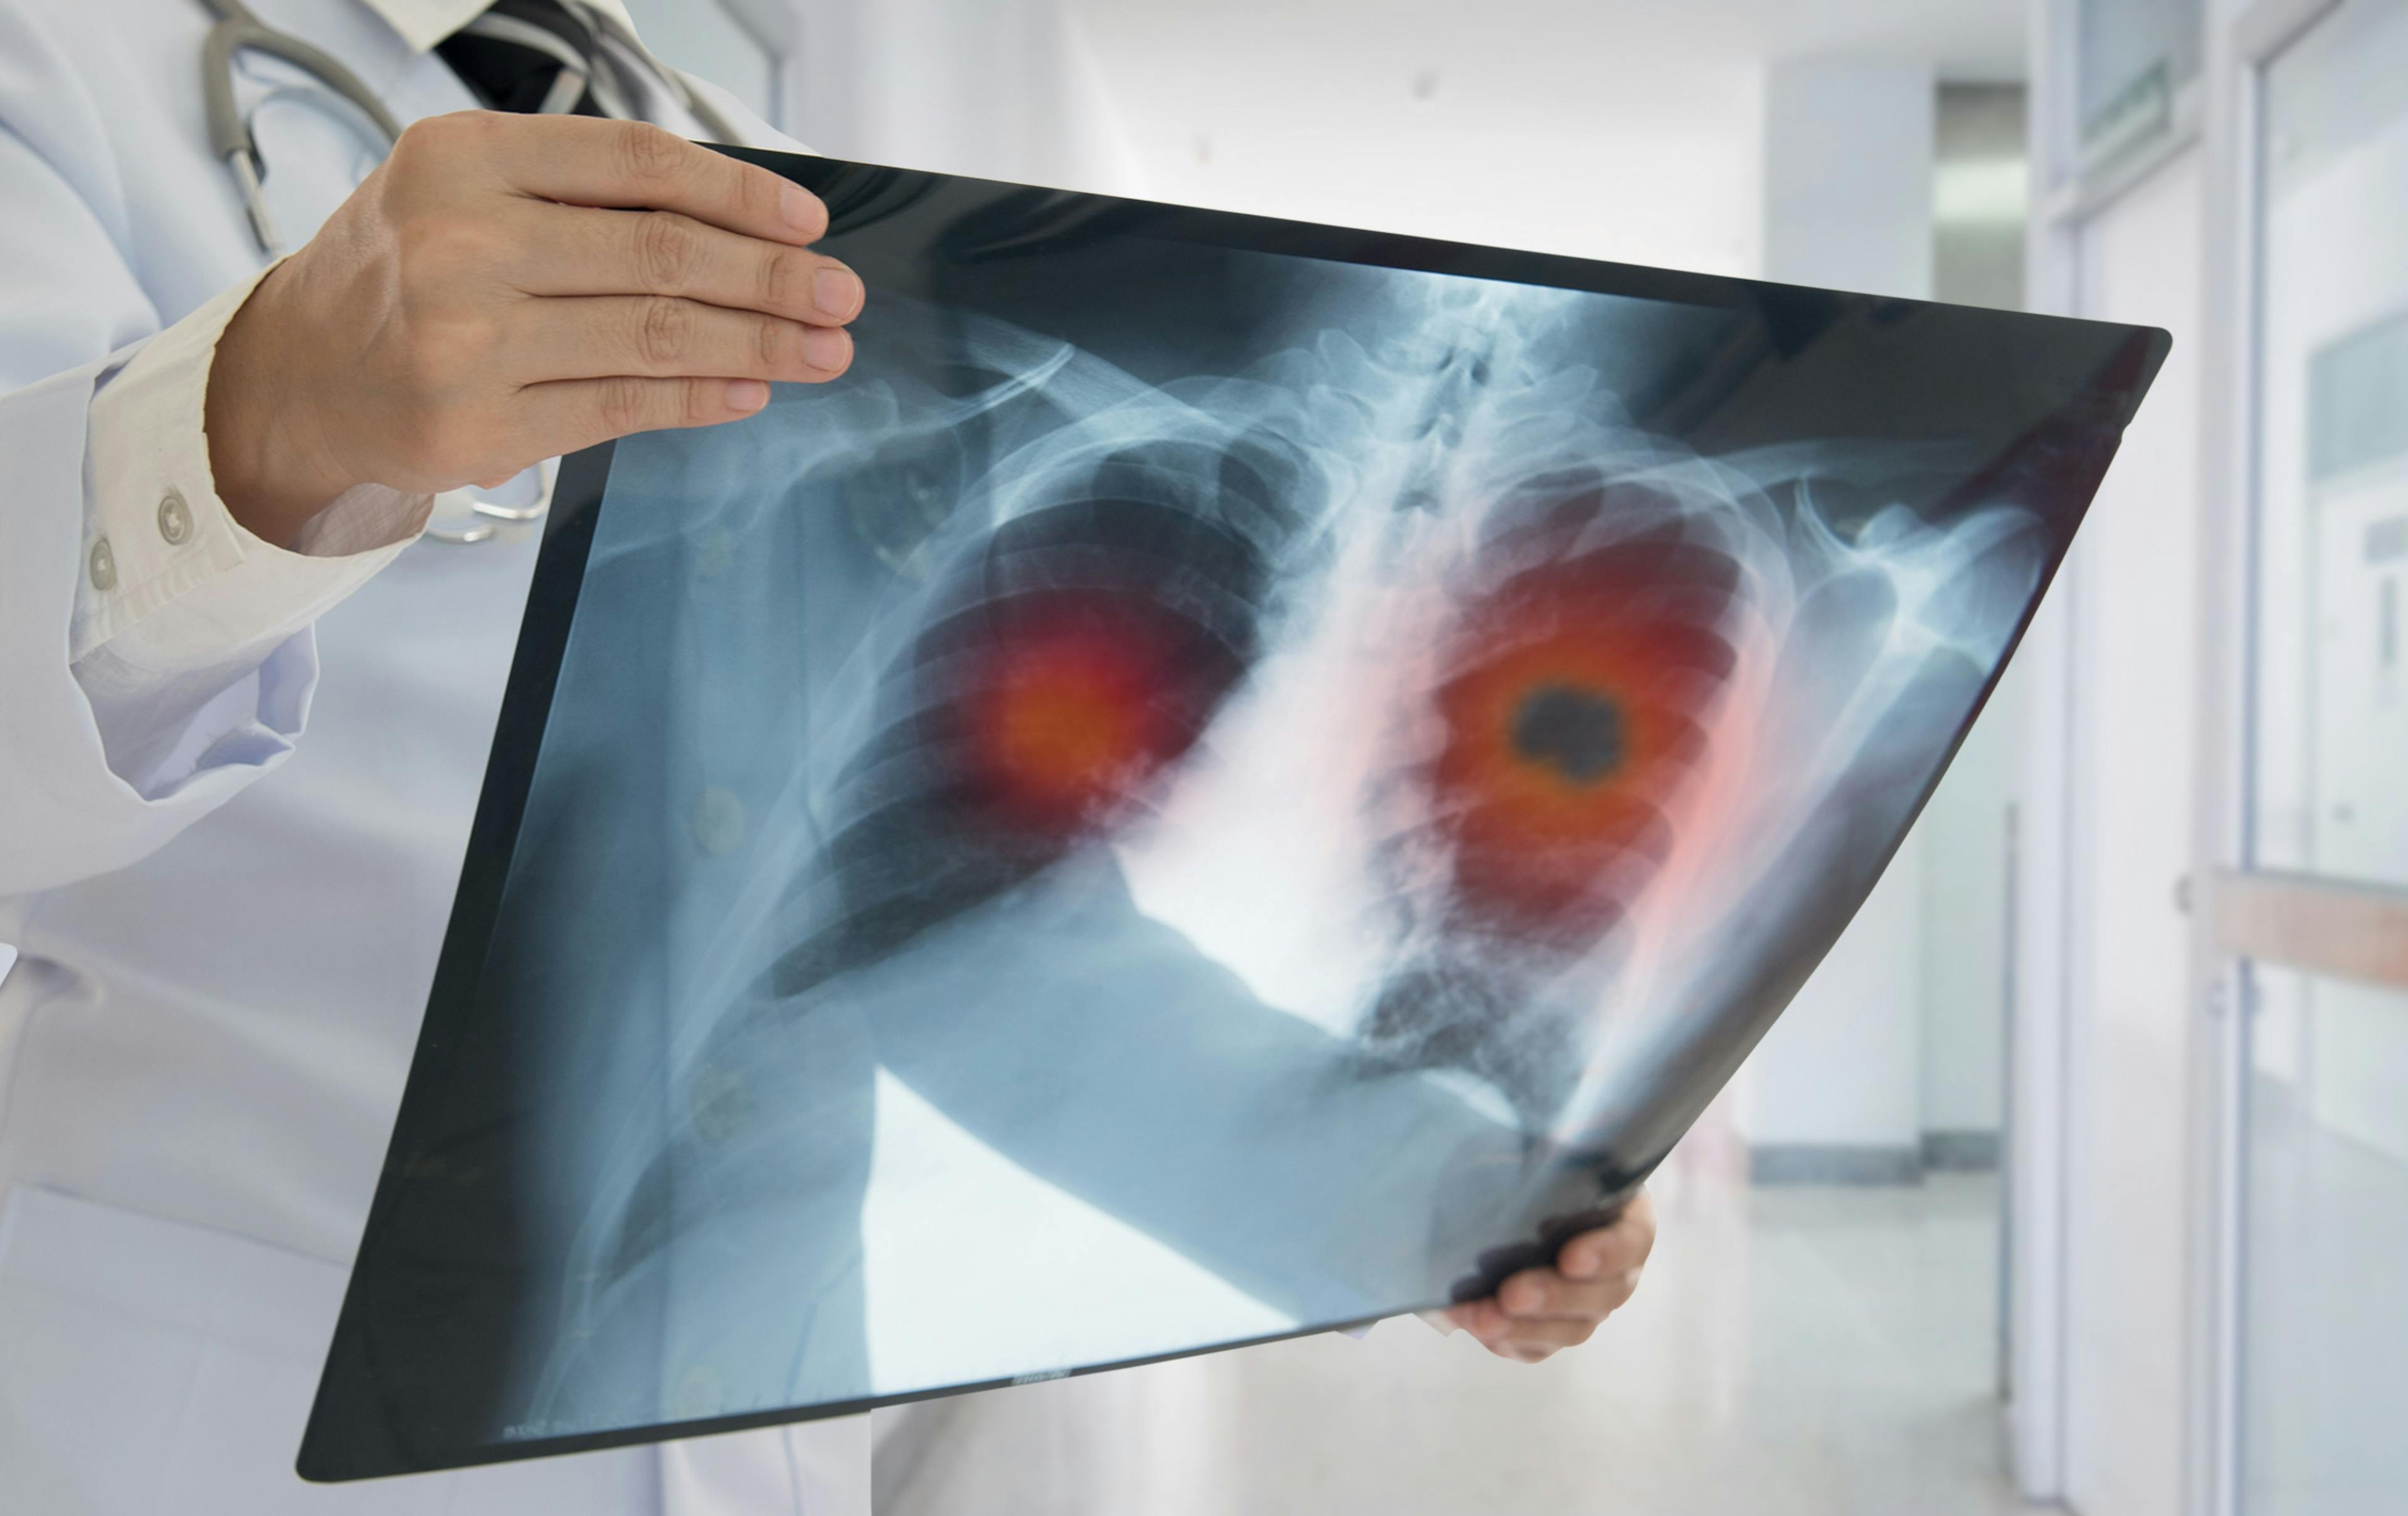 Physician looking at lung X-ray -- Image credit: utah51 | stock.adobe.com